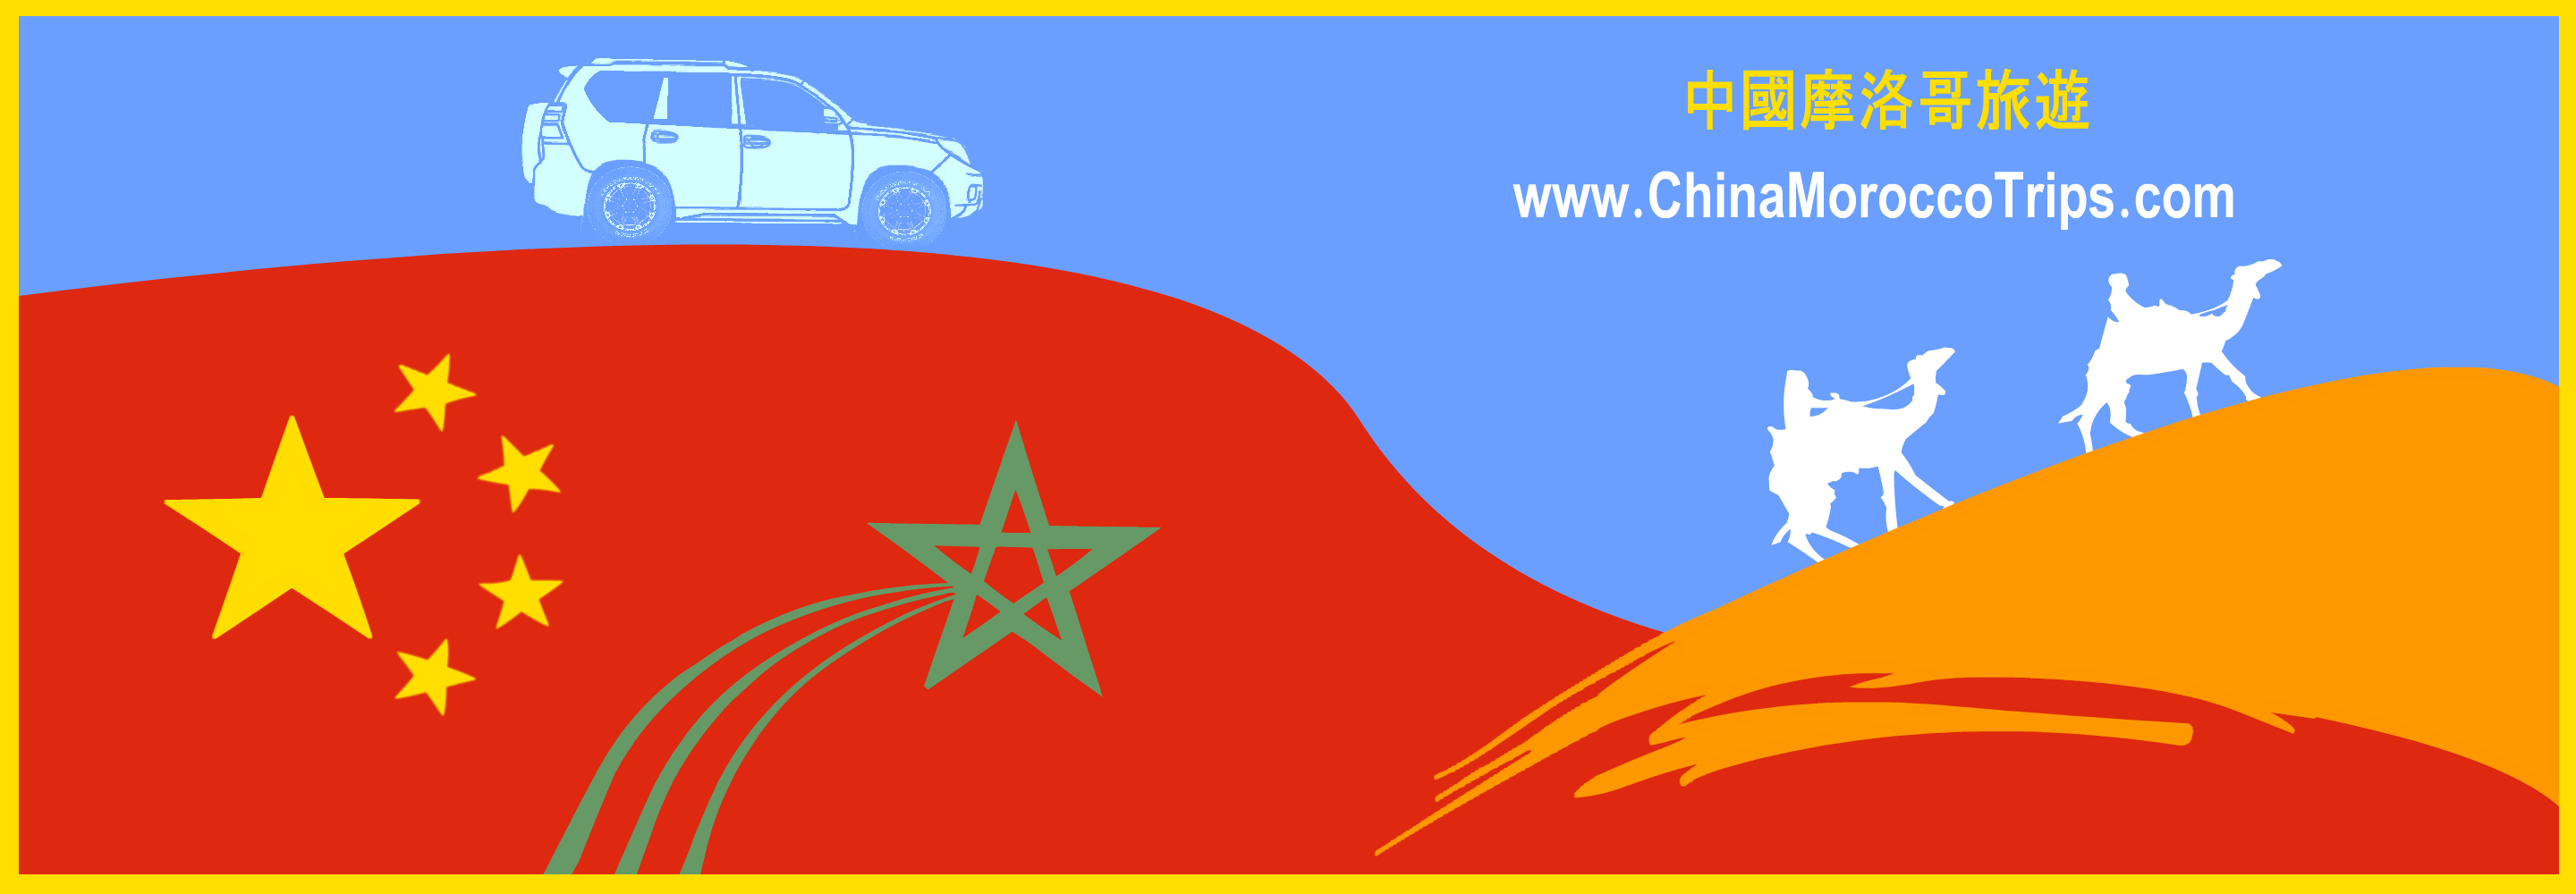 china morocco trips